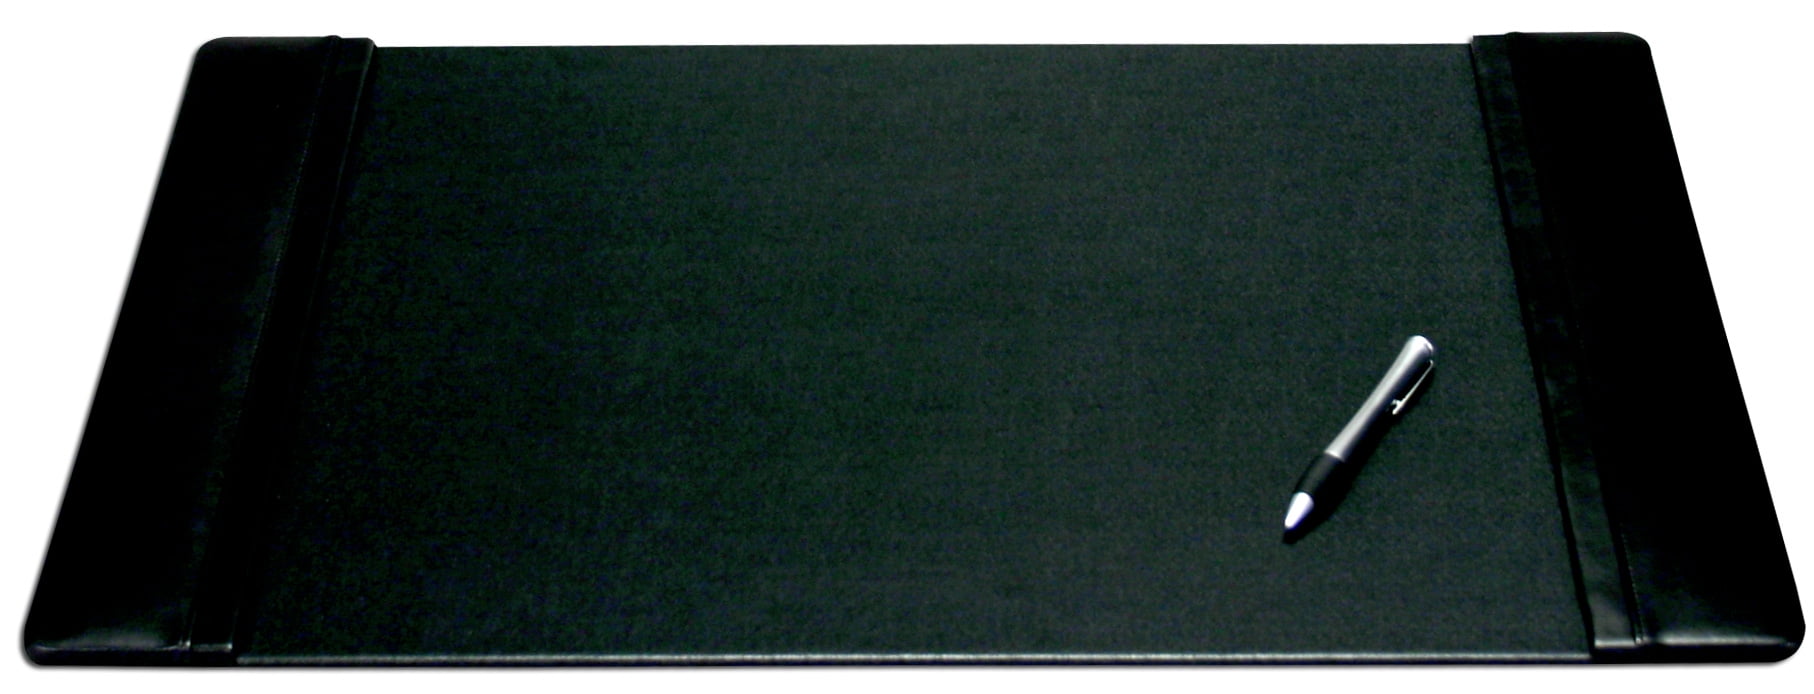 96.52 x 60.96 x 1.55 cm Dacasso Leather Side-Rail Desk Pad Black